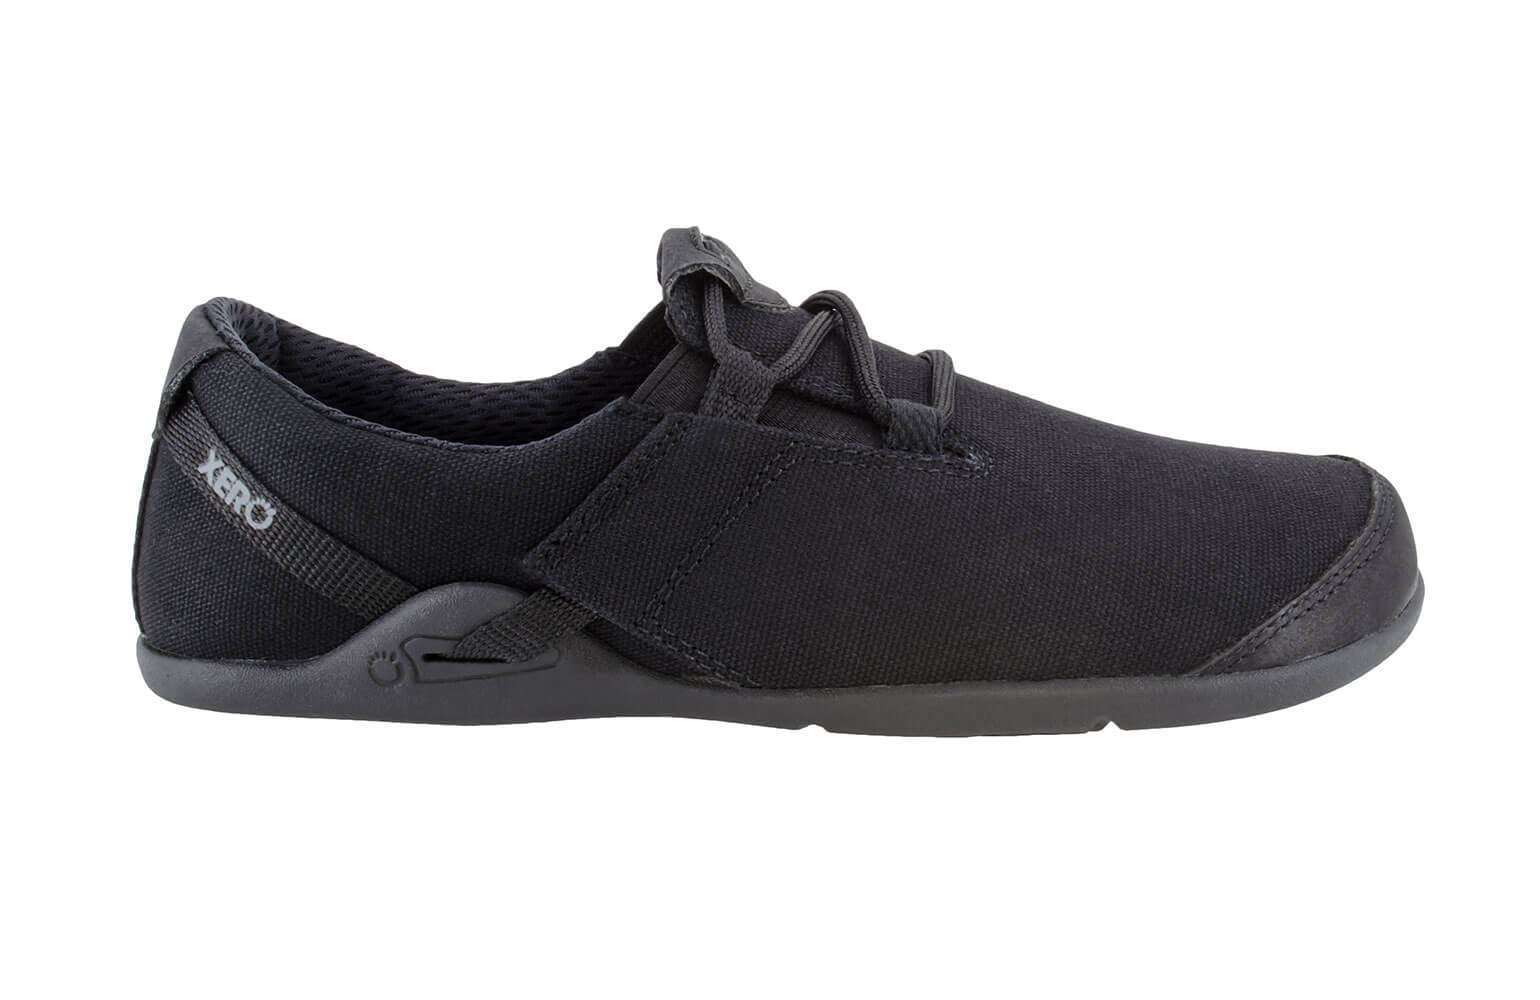 xero shoes black friday sale